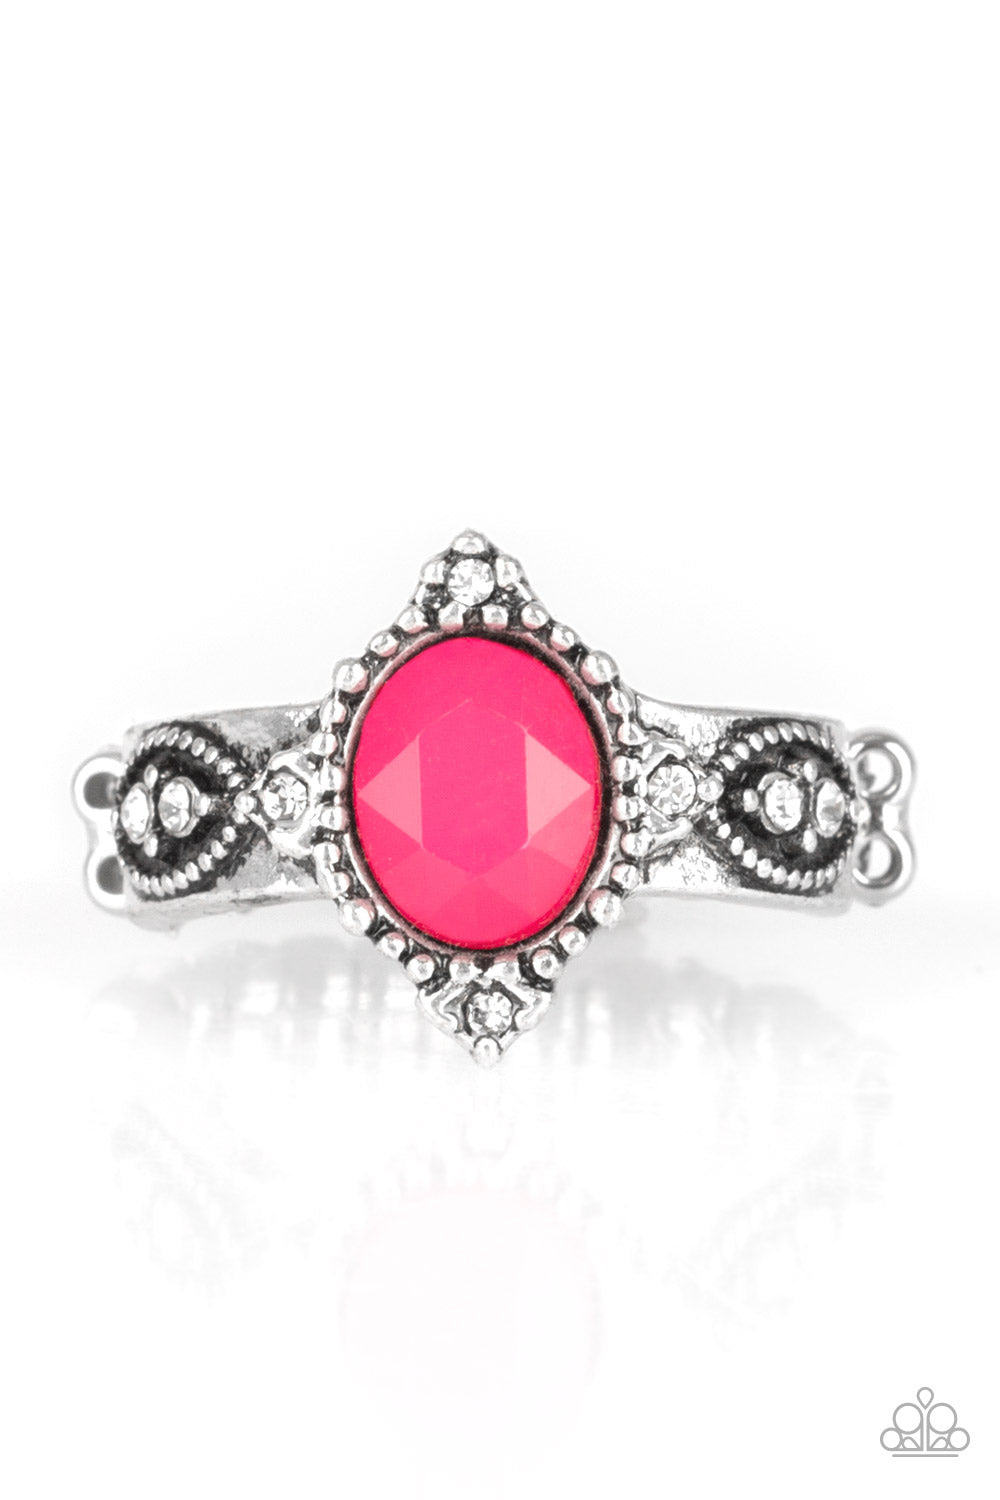 Pricelessly Princess - Pink Paparazzi Ring